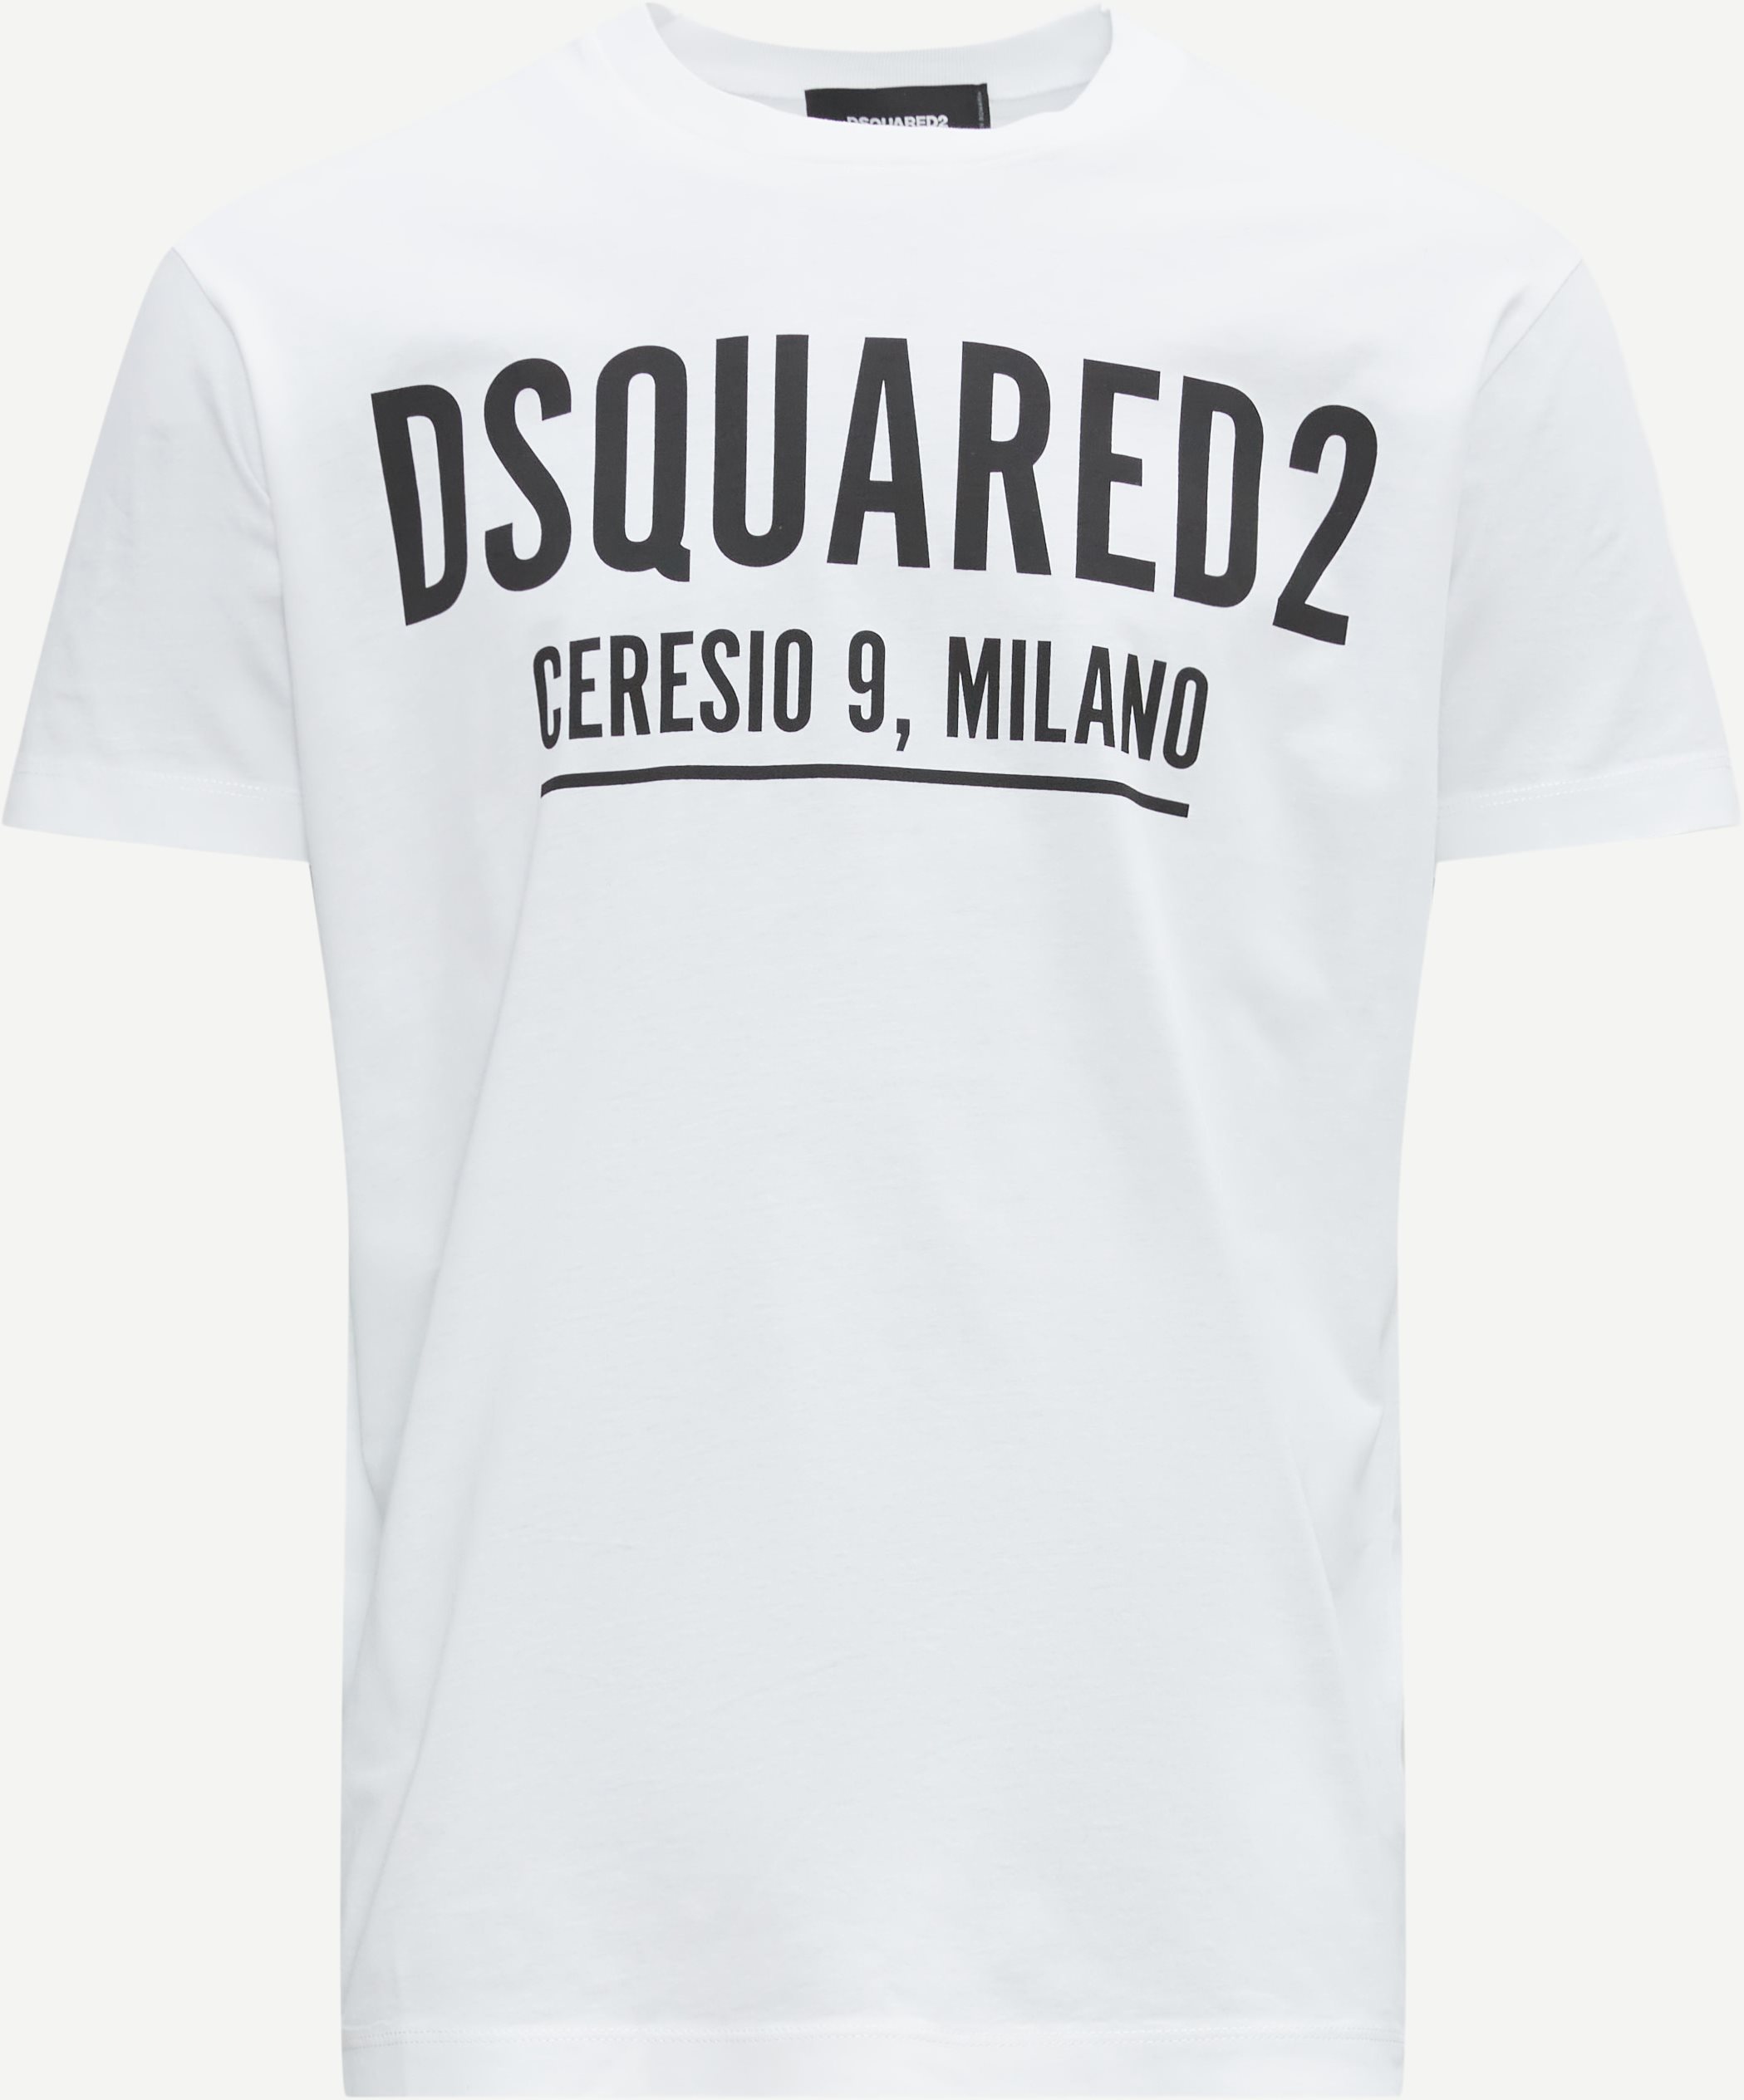 Ceresio9 Cool Tee - T-shirts - Regular fit - Hvid